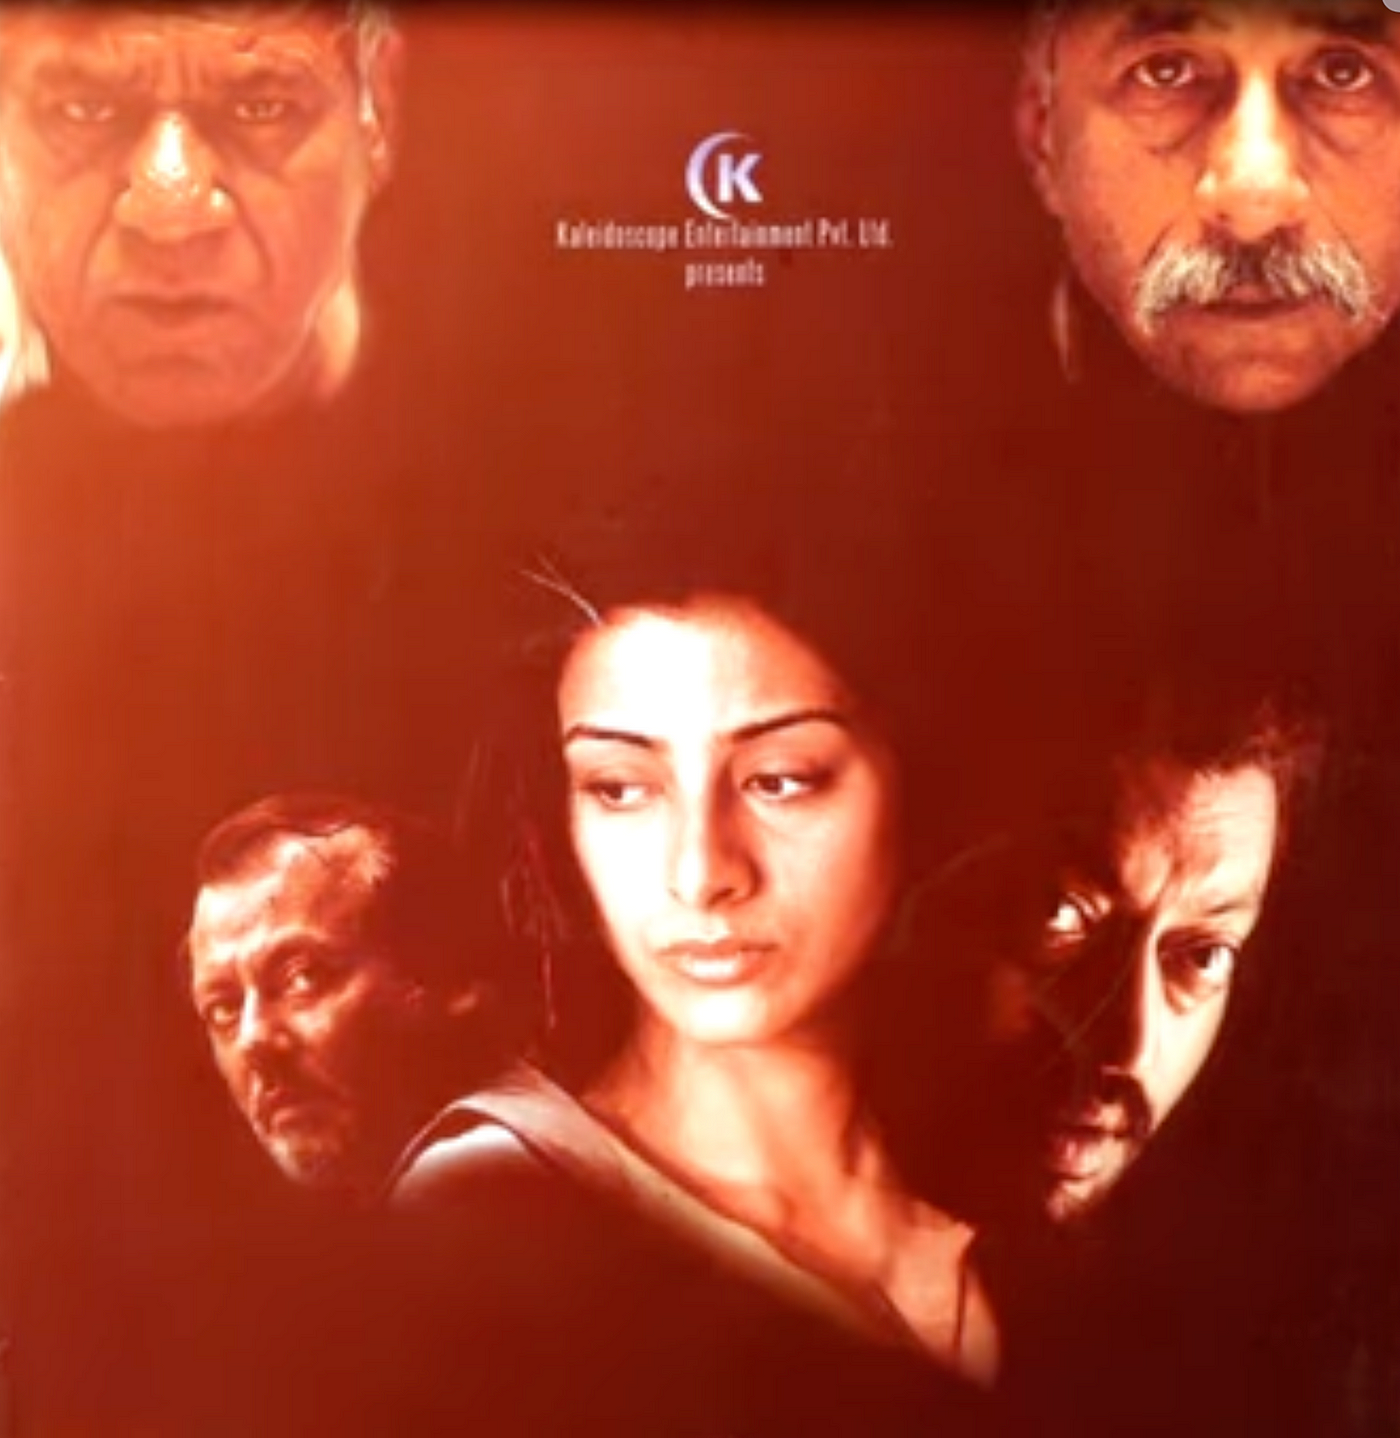 Vishal Bharadwaj has given me good looks in his films: Shahid Kapoor